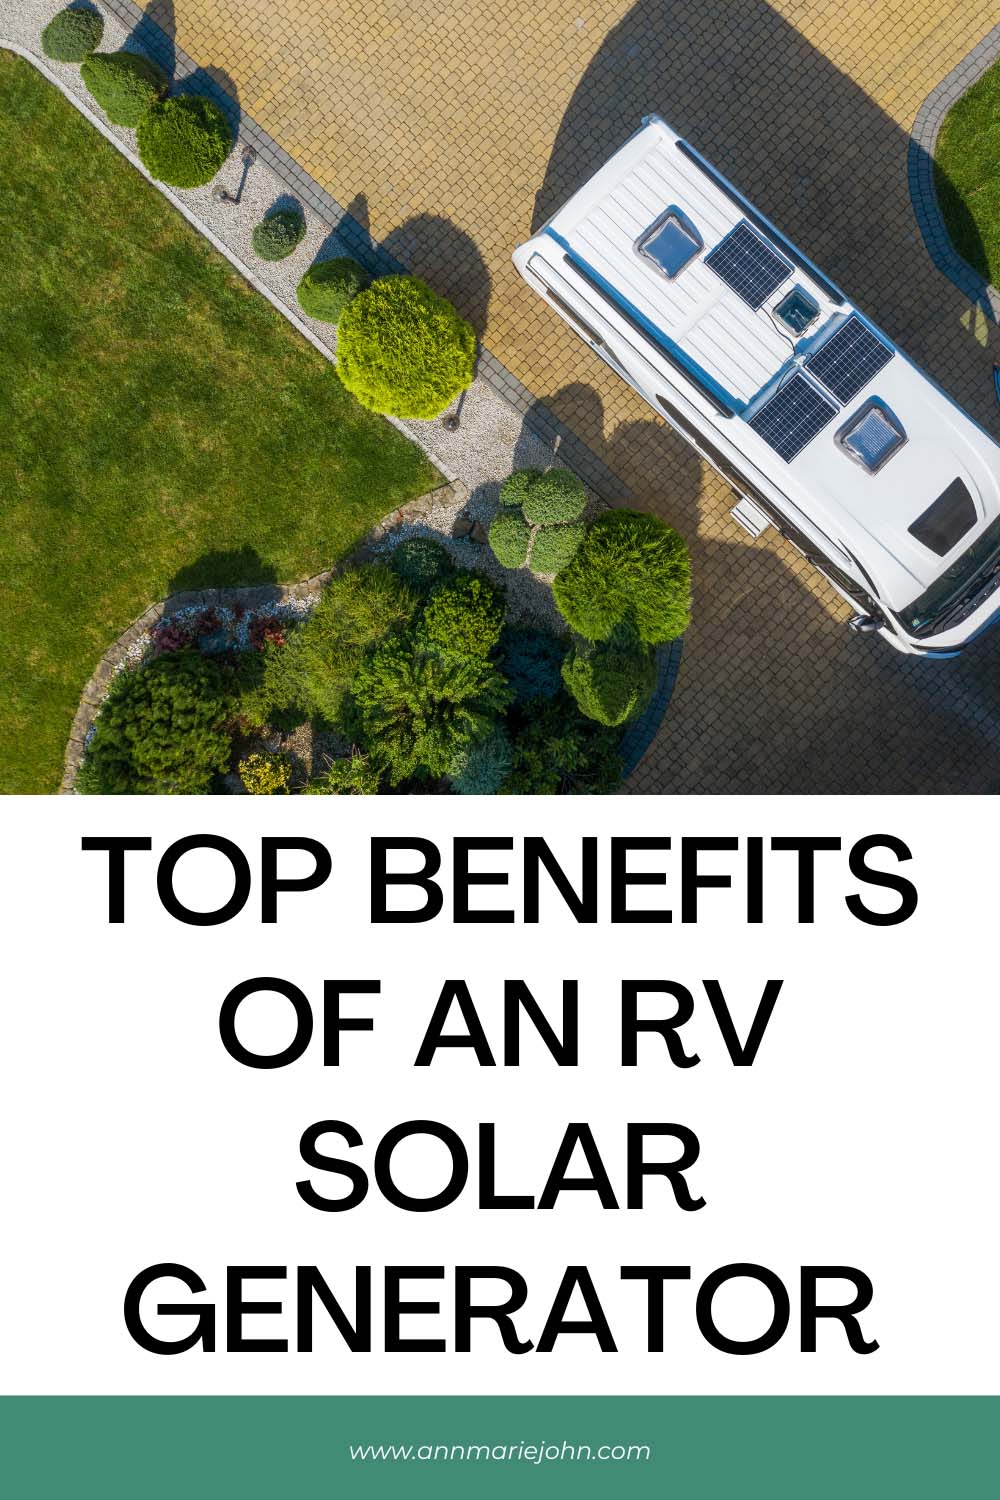 Top Benefits of an RV Solar Generator